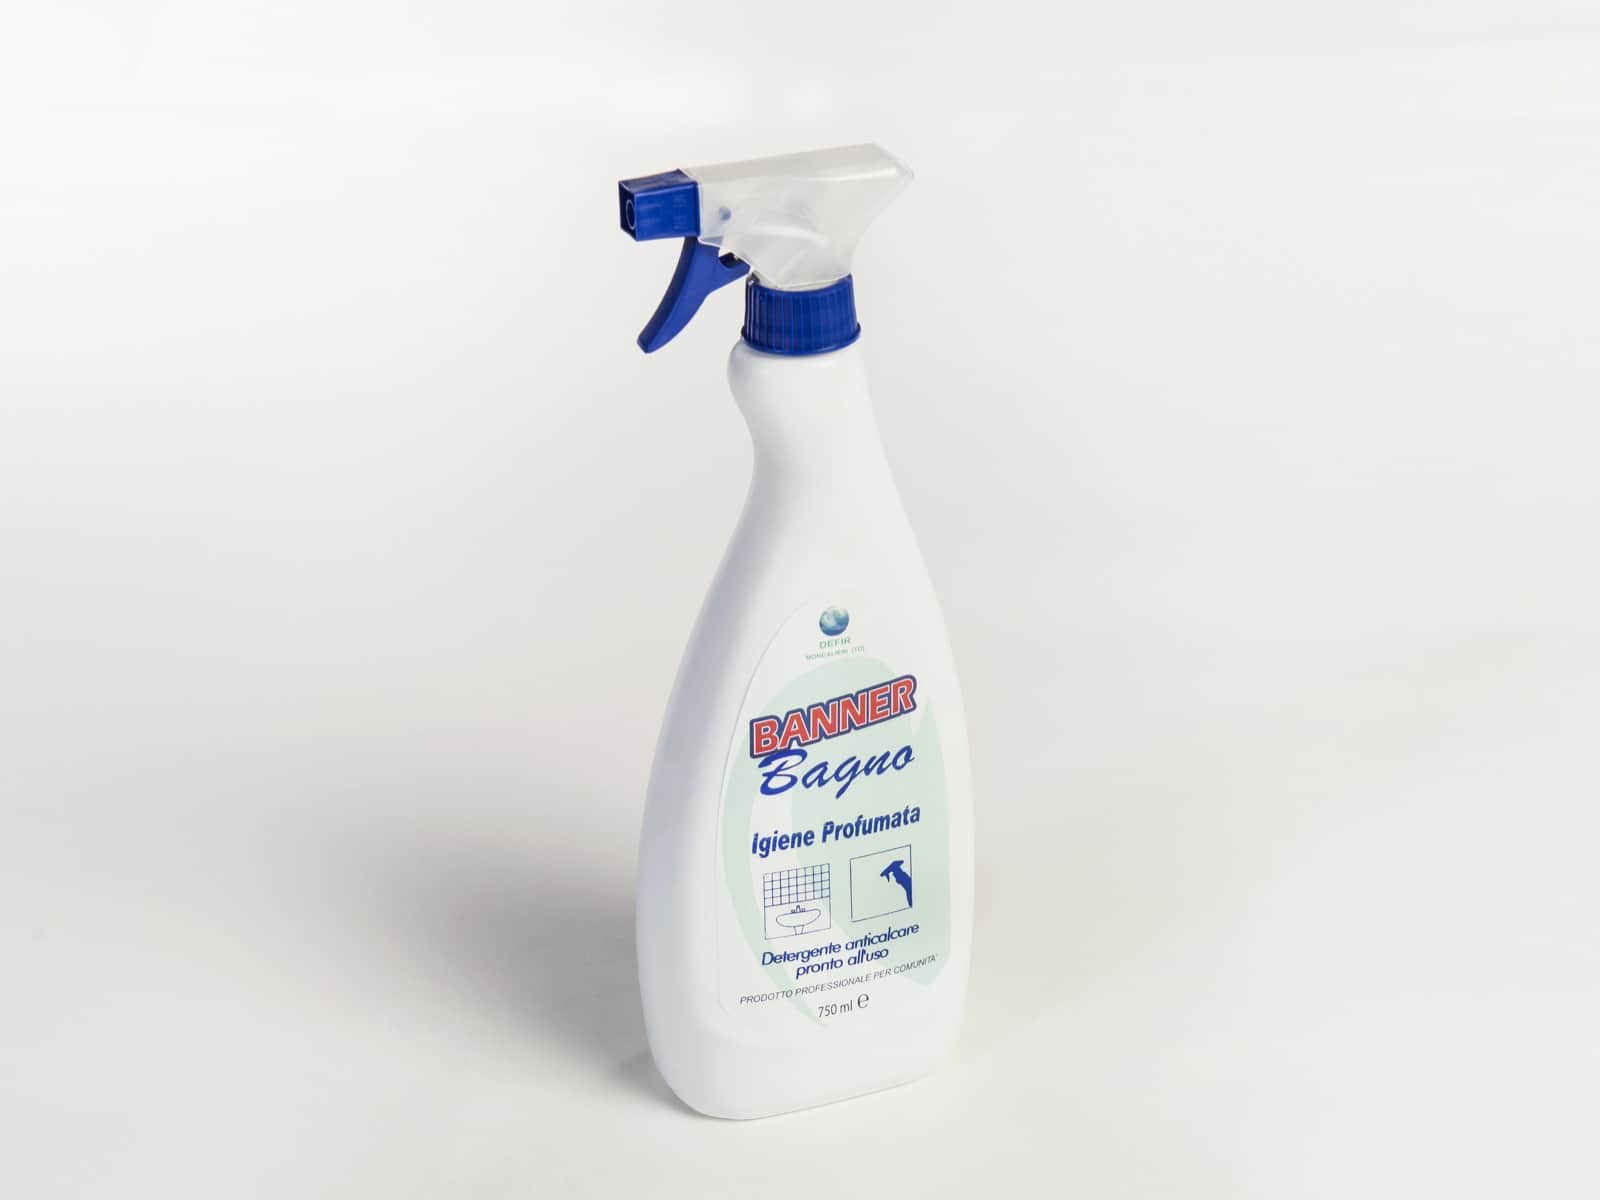 Axa Banner Bagno anticalcare 750ml + Spray - Defir detergenti Moncalieri Torino